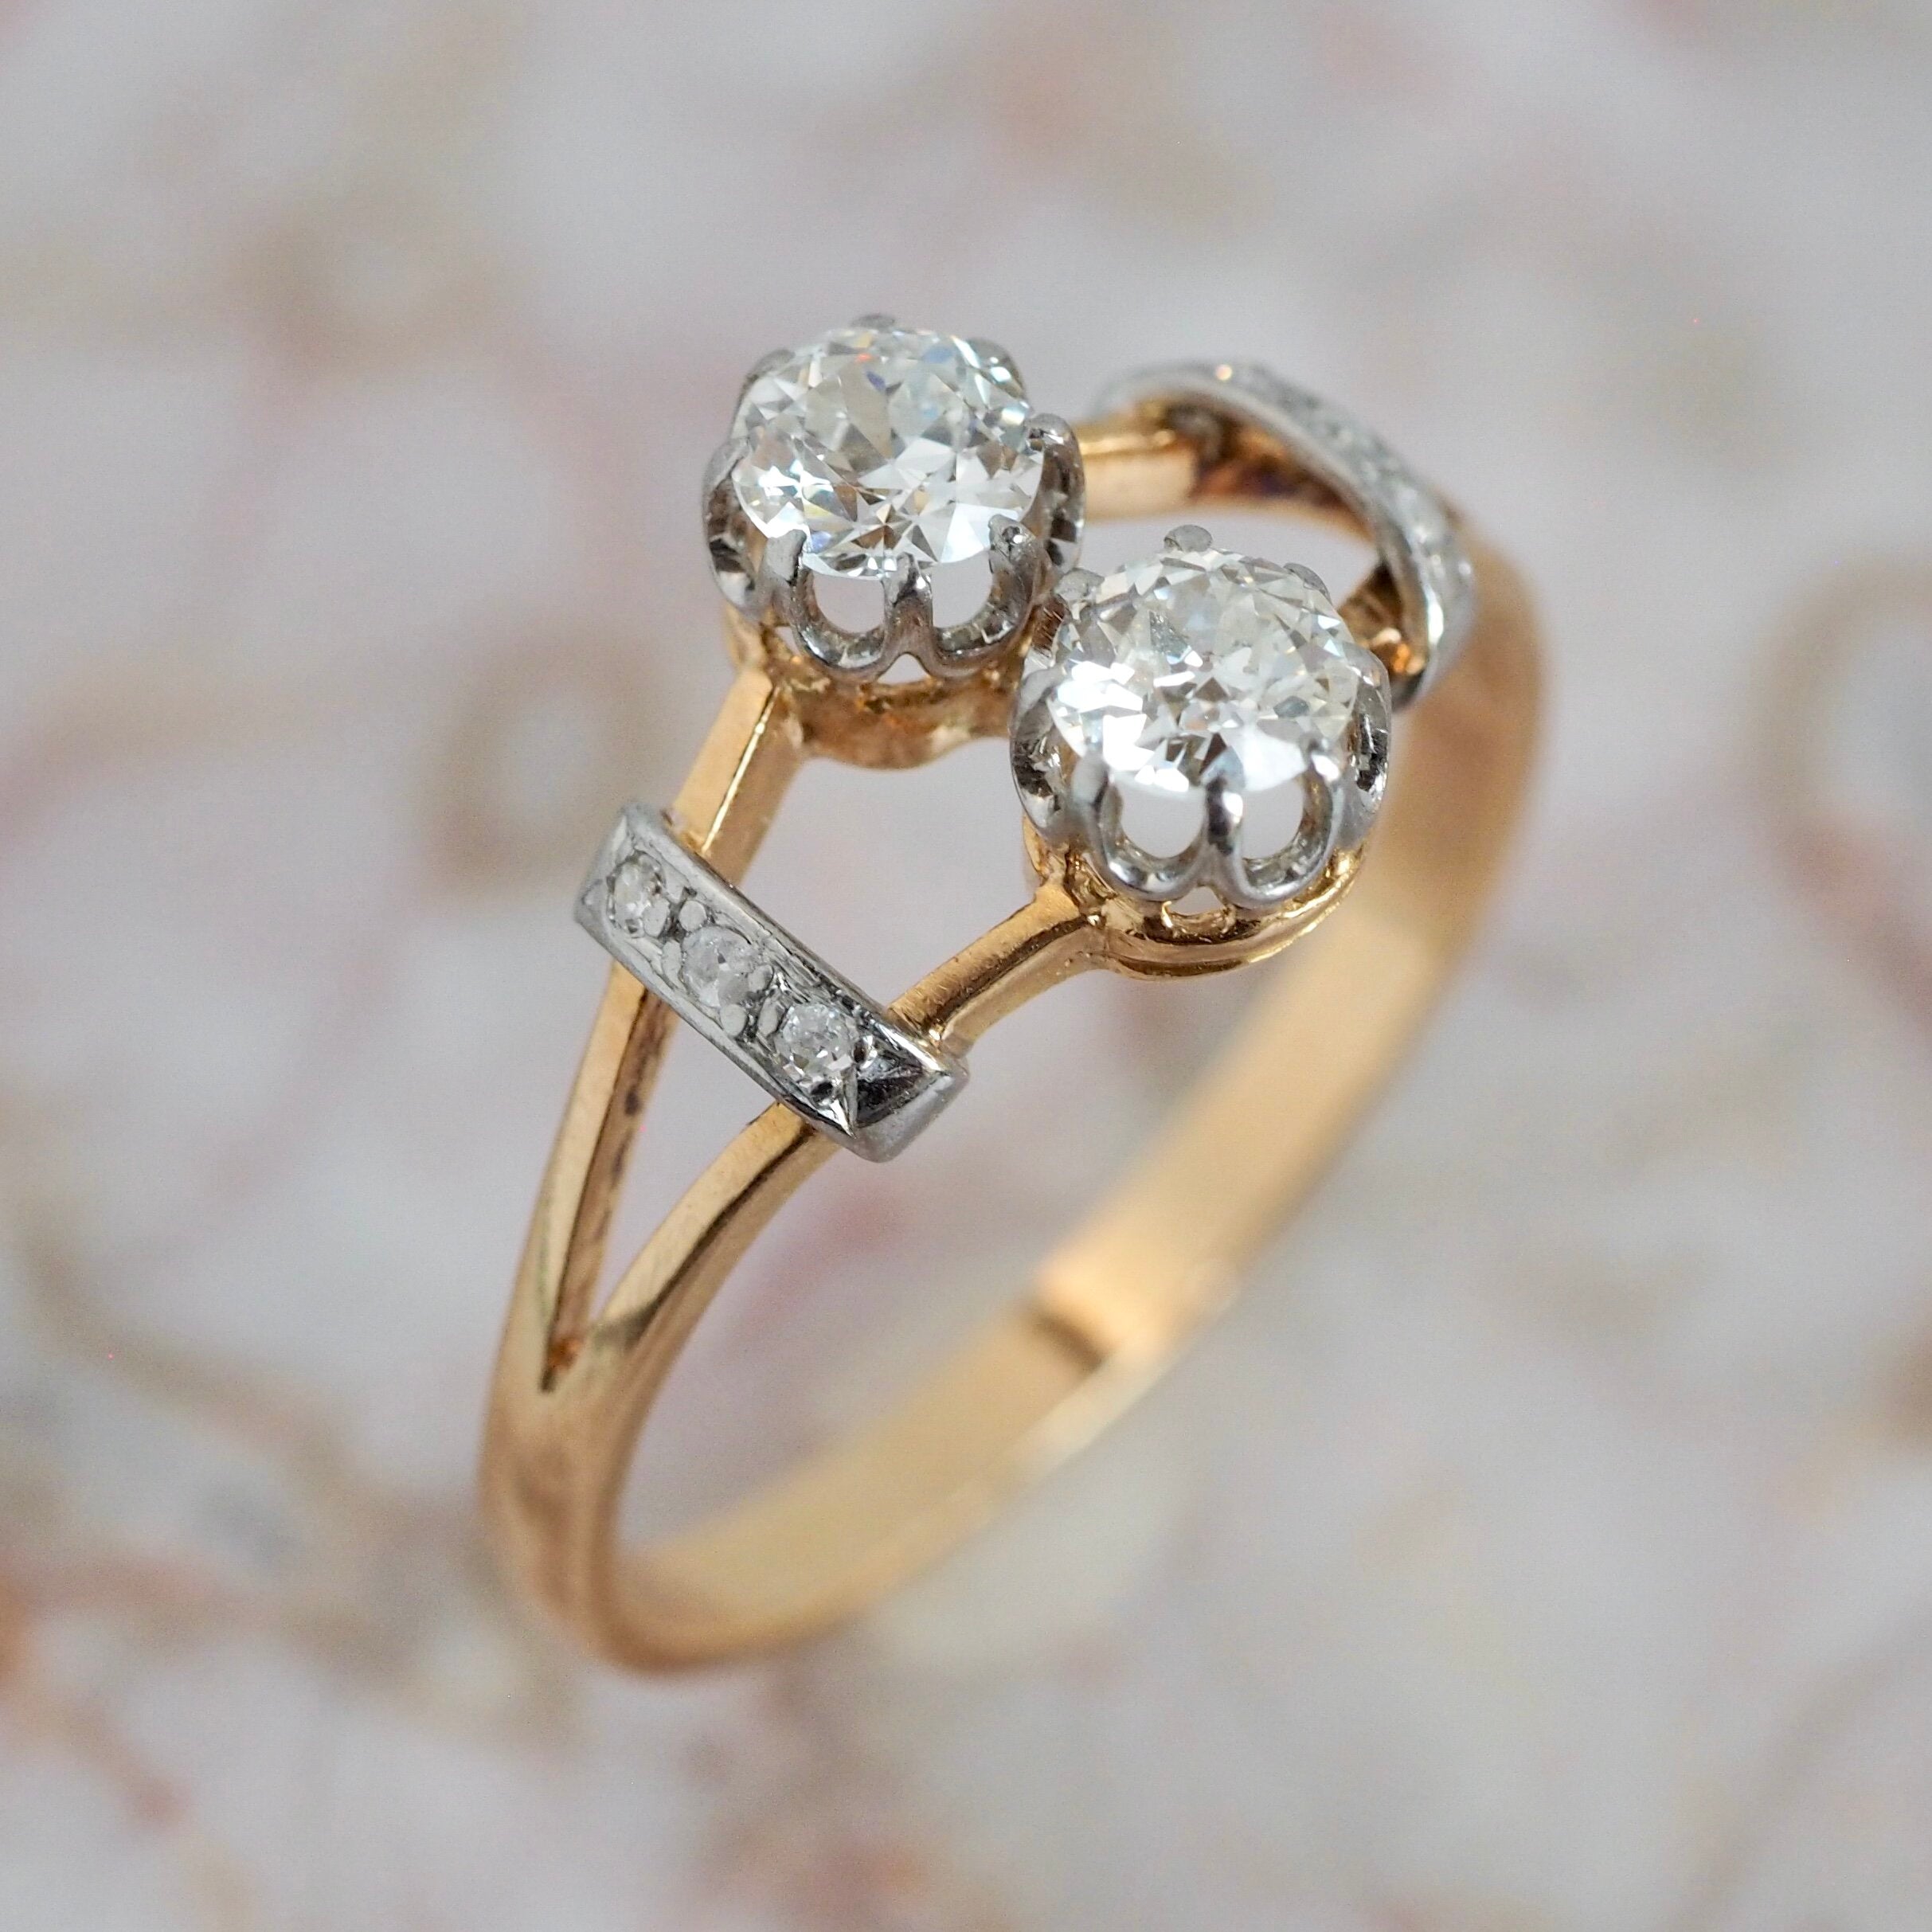 Antique 18k Gold French Art Nouveau Moi et Toi Diamond Ring